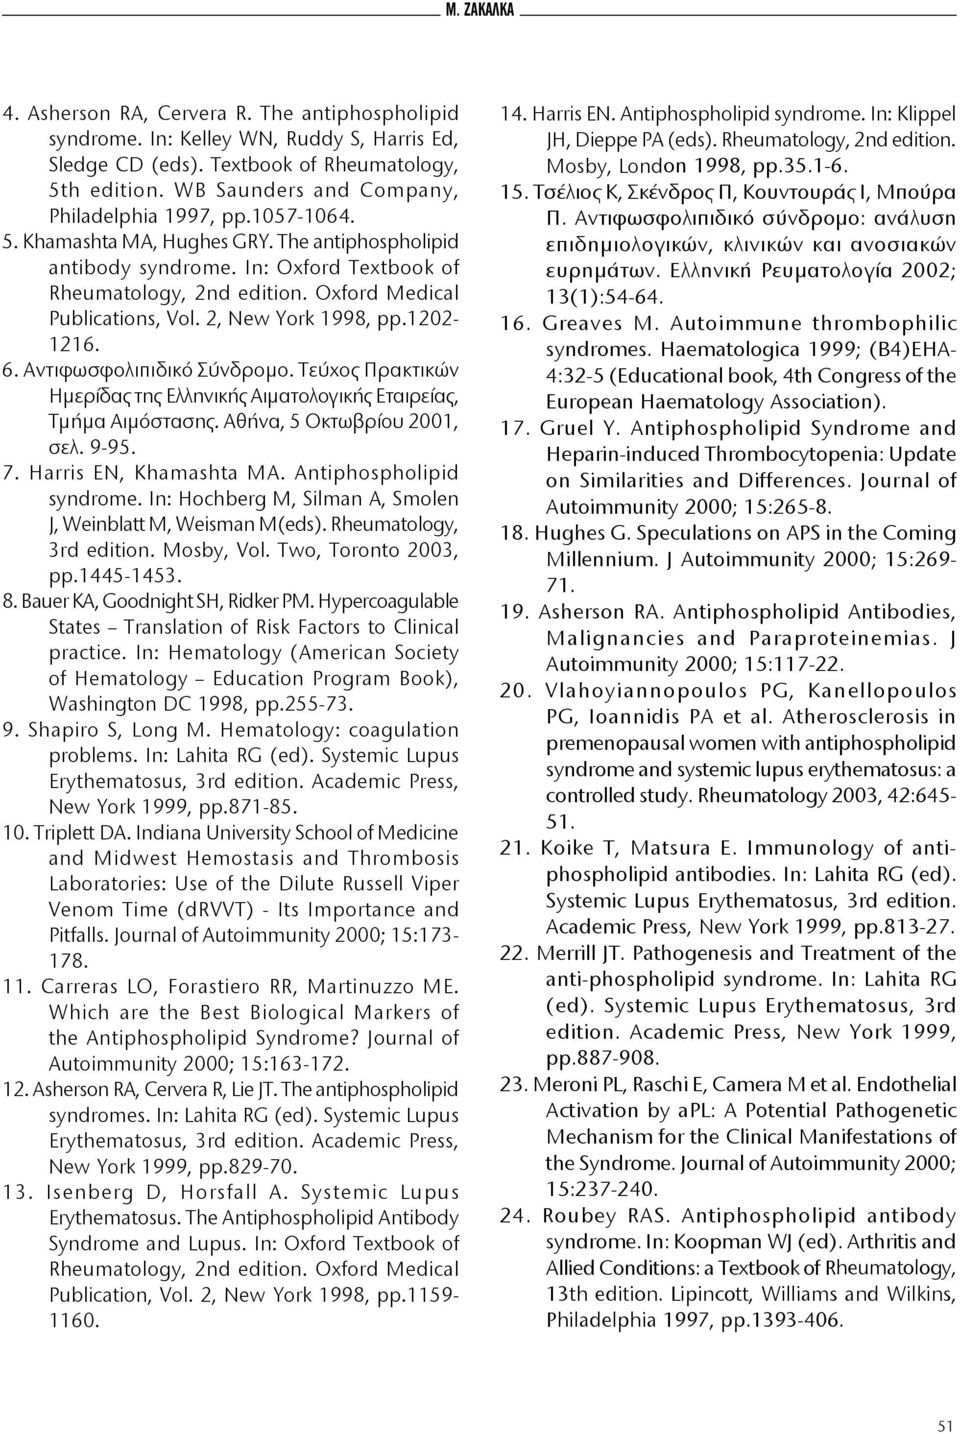 Oxford Medical Publications, Vol. 2, New York 1998, pp.1202-1216. 6. Αντιφωσφολιπιδικό Σύνδρομο. Τεύχος Πρακτικών Ημερίδας της Ελληνικής Αιματολογικής Εταιρείας, Τμήμα Αιμόστασης.